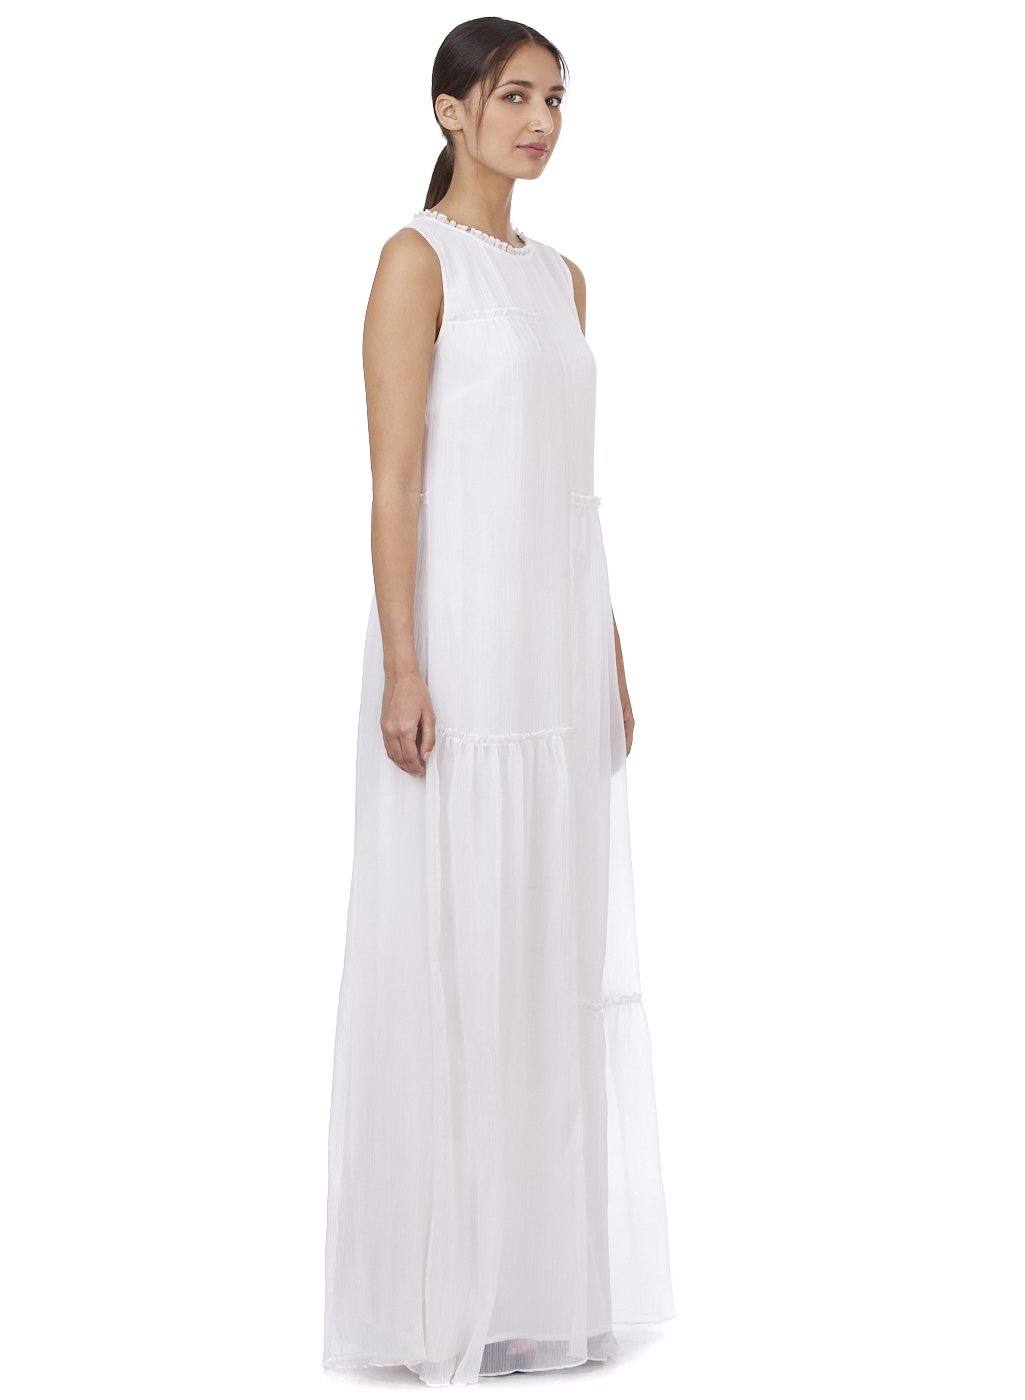 MILA FLARED DRESS - Genes online store 2020